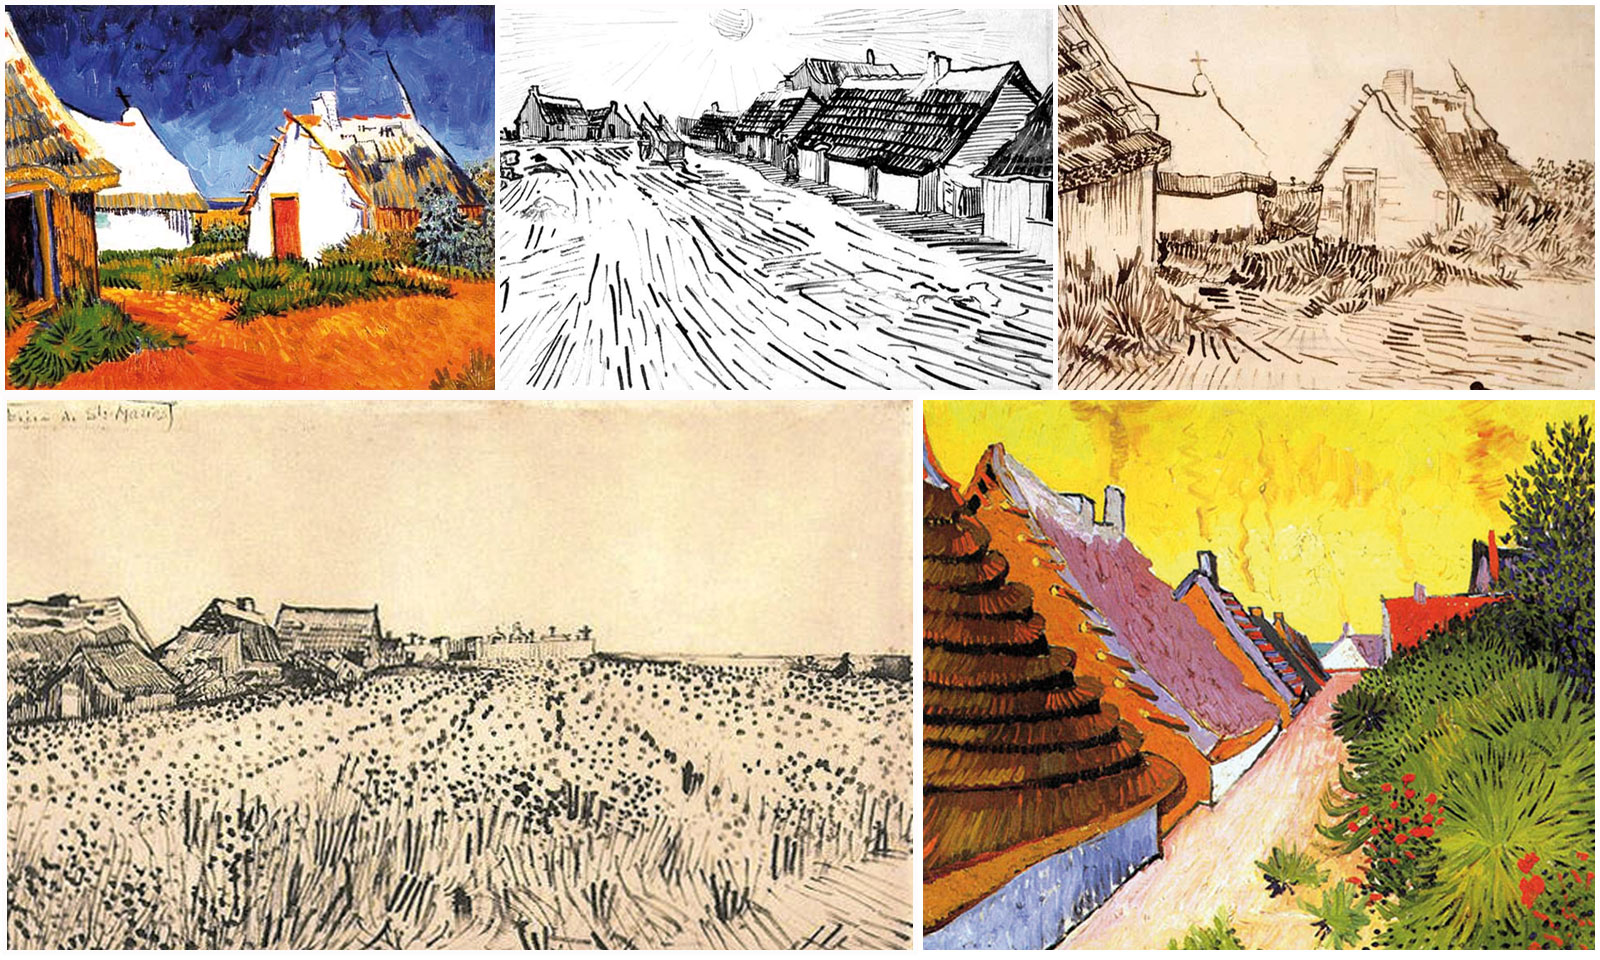 La semaine de Van Gogh Saintes Maries LES SAINTES, notre village